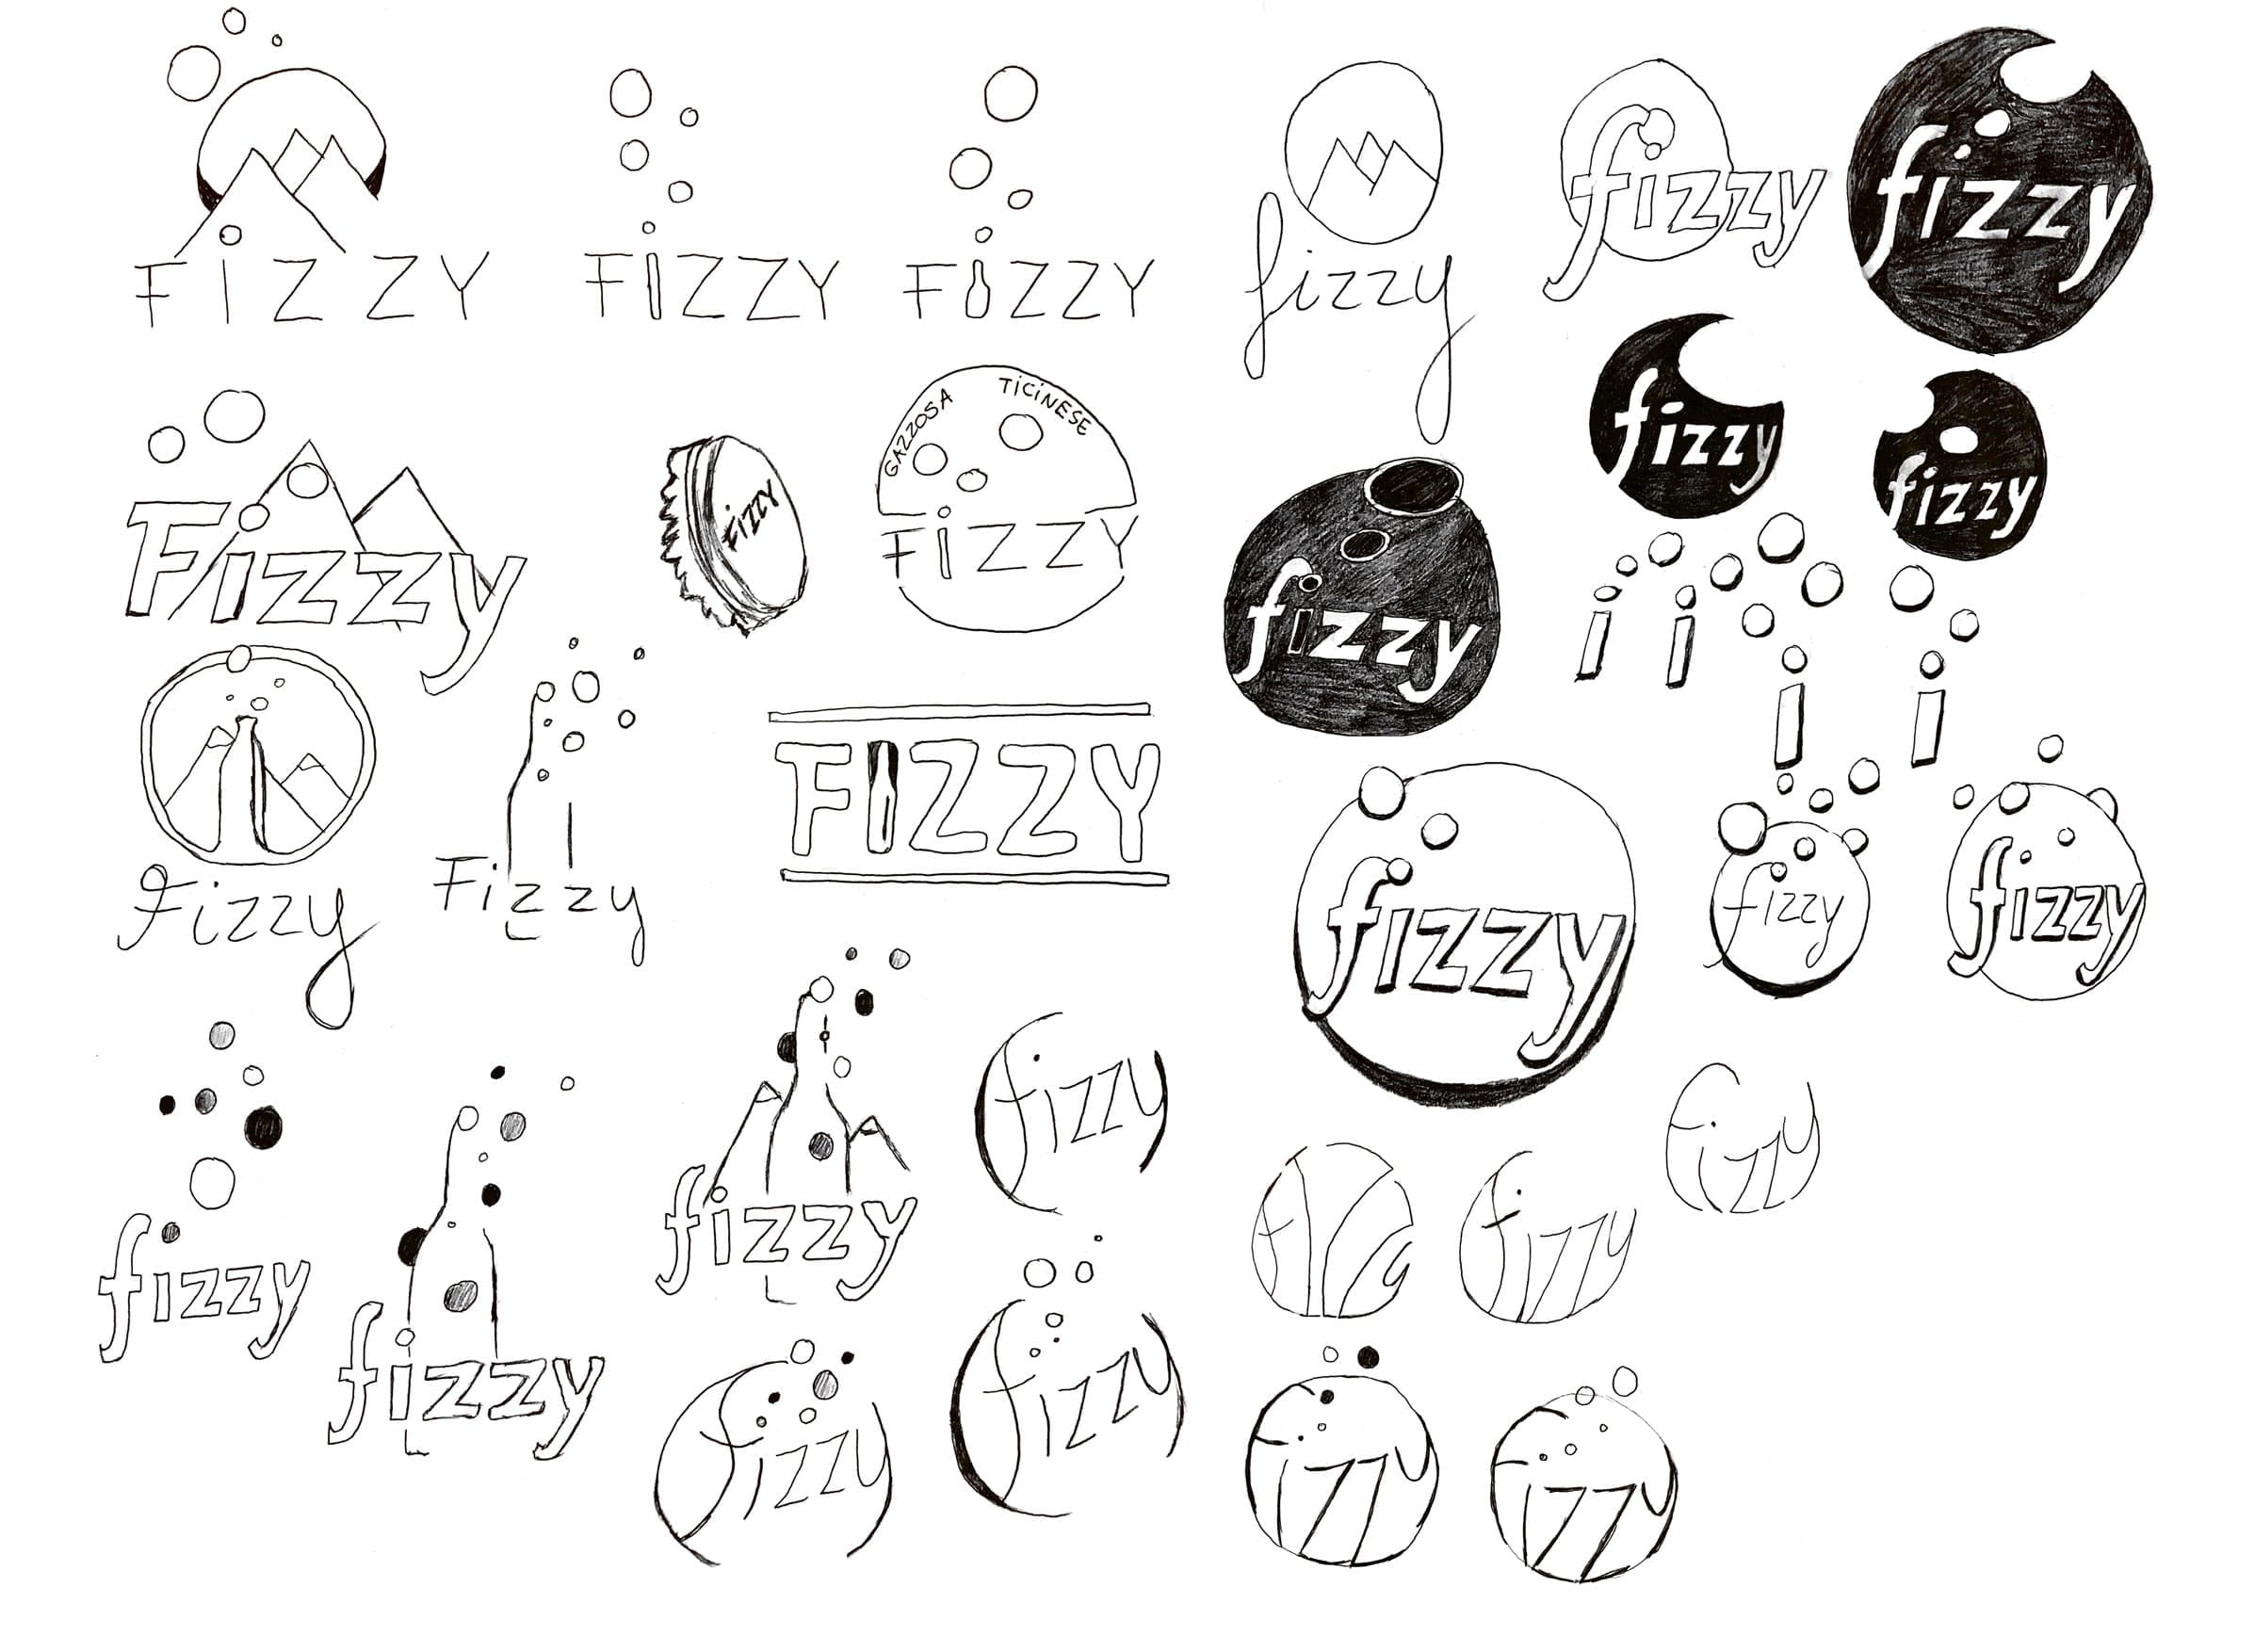 Fizzy_Logo_Sketchs